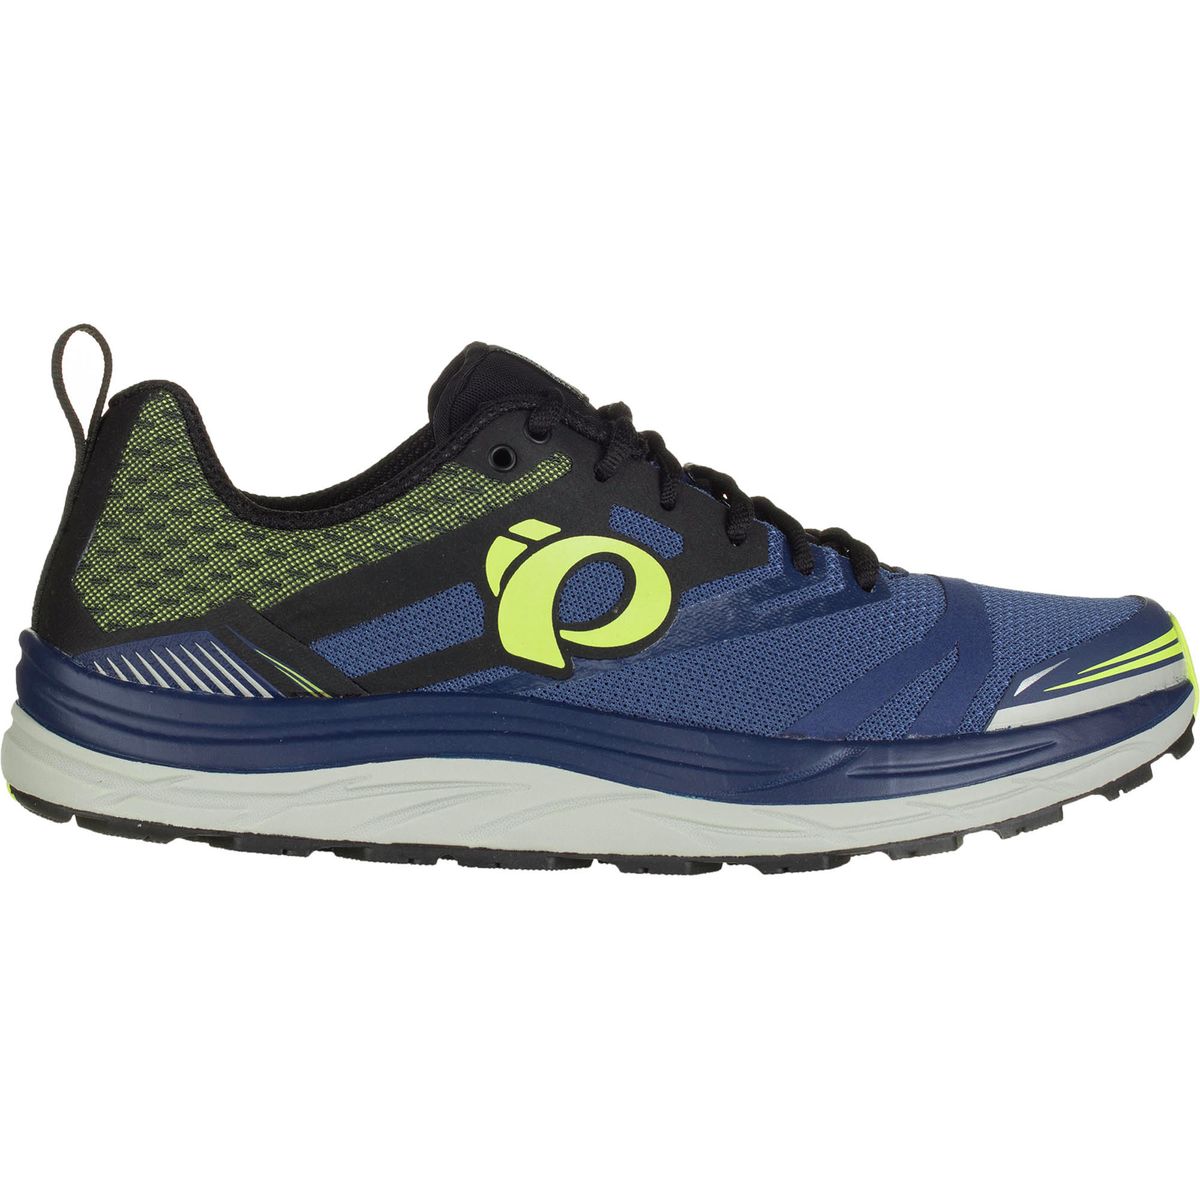 PEARL iZUMi EM Trail N3 Running Shoe - Men's - Footwear